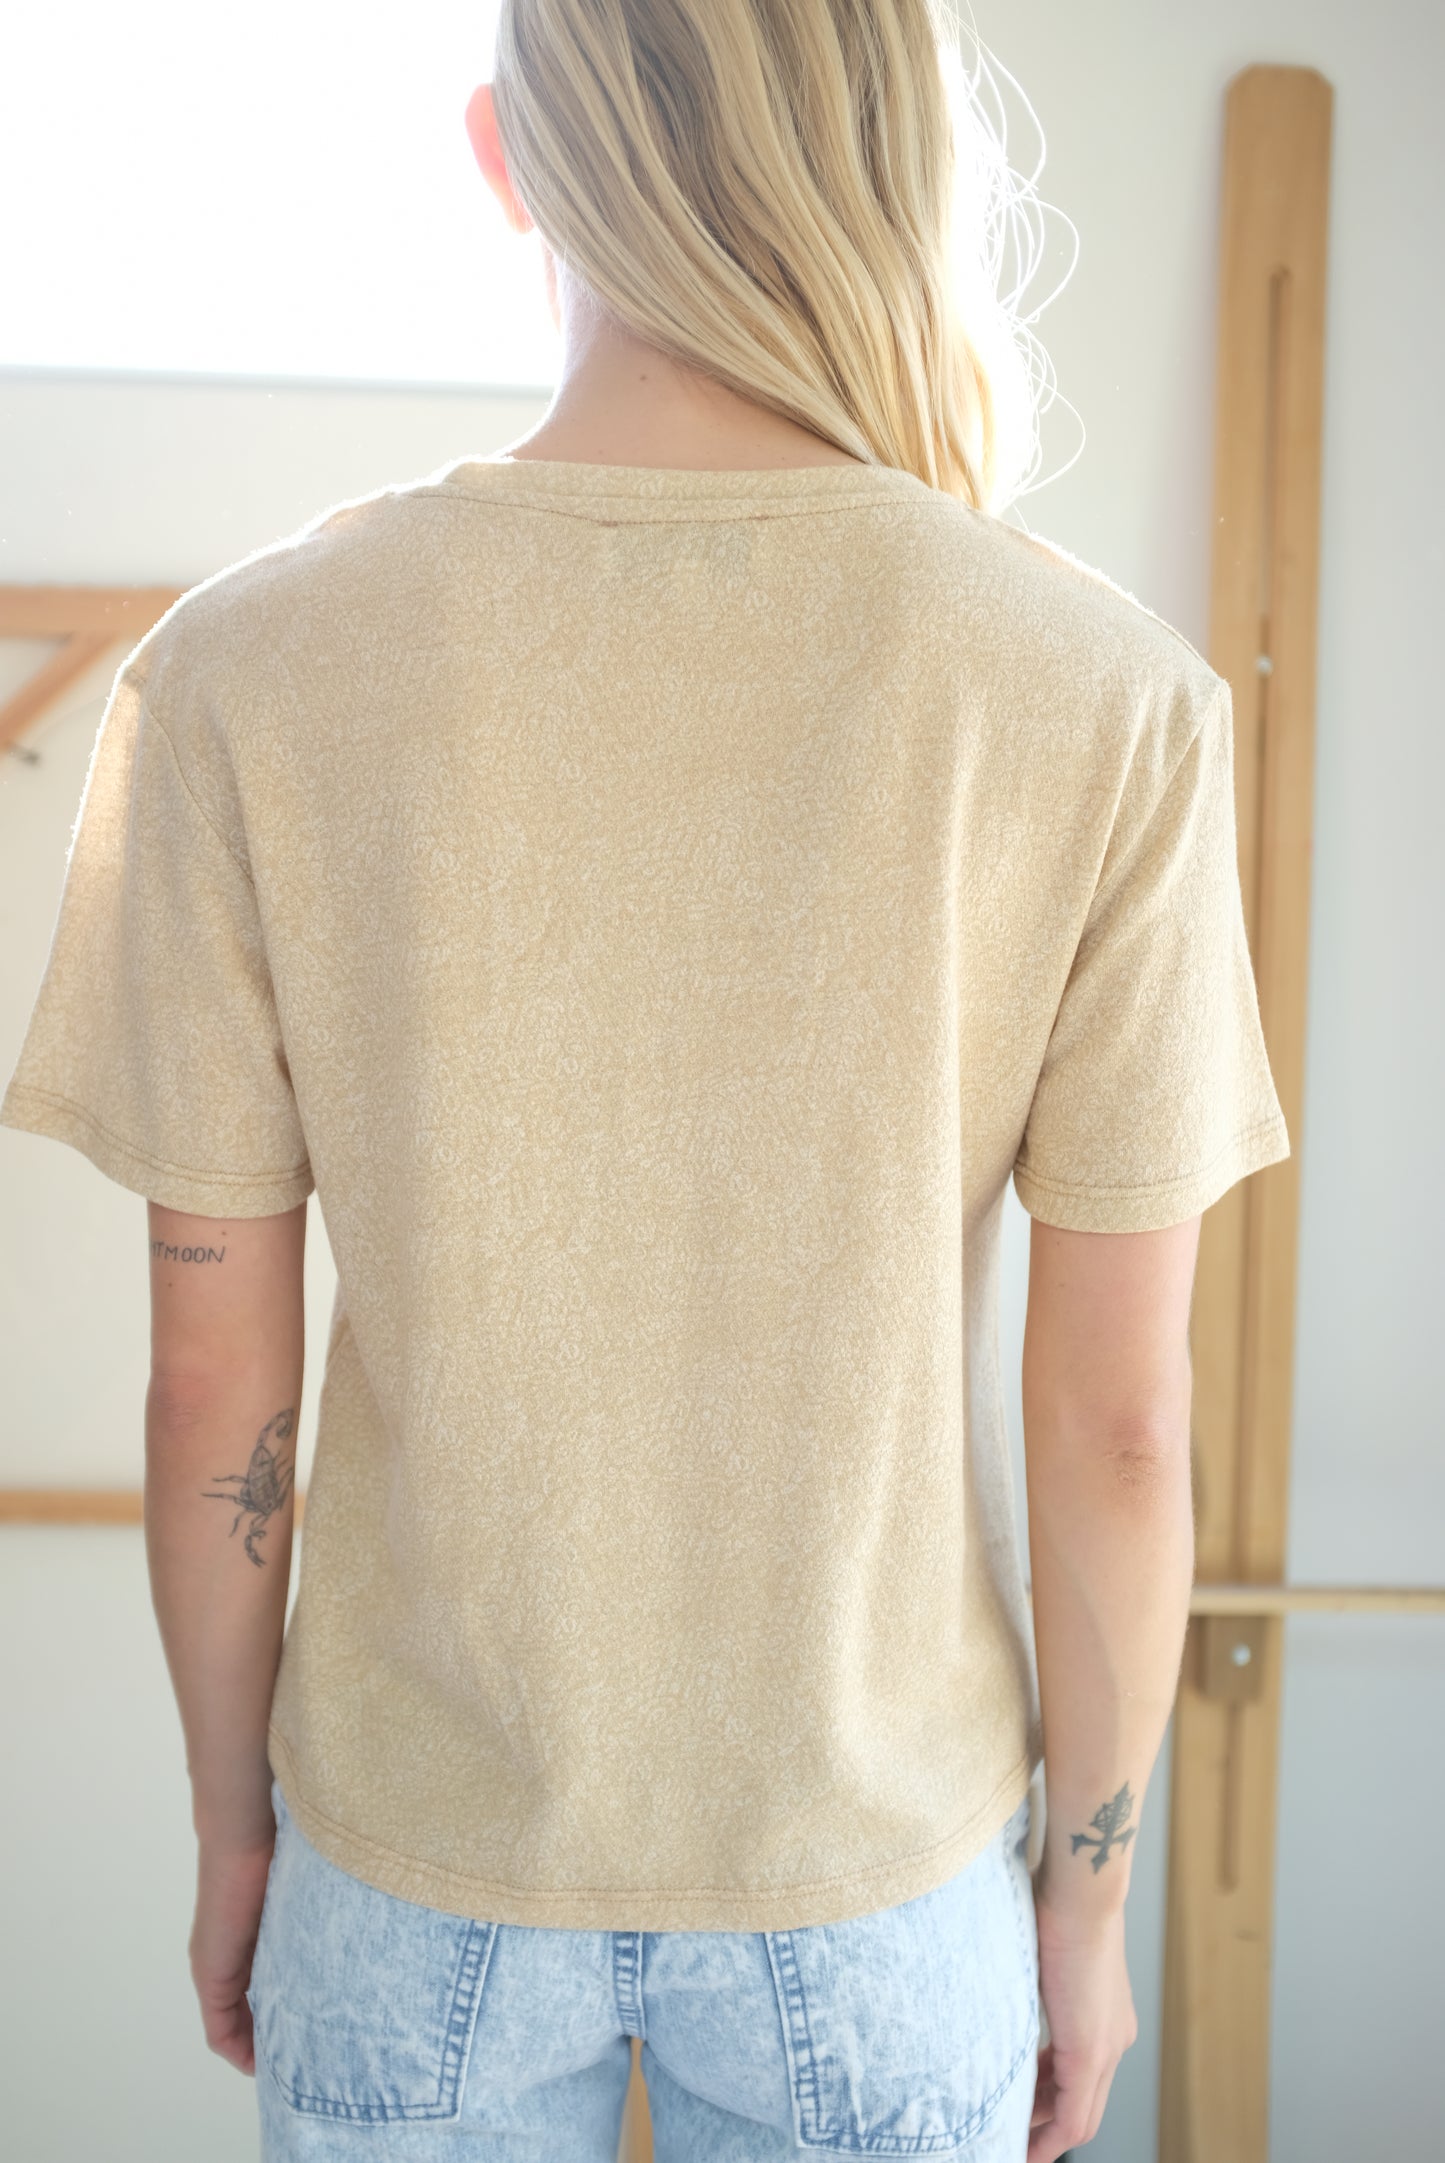 Beklina Merino T-Shirt Animal Print Tan